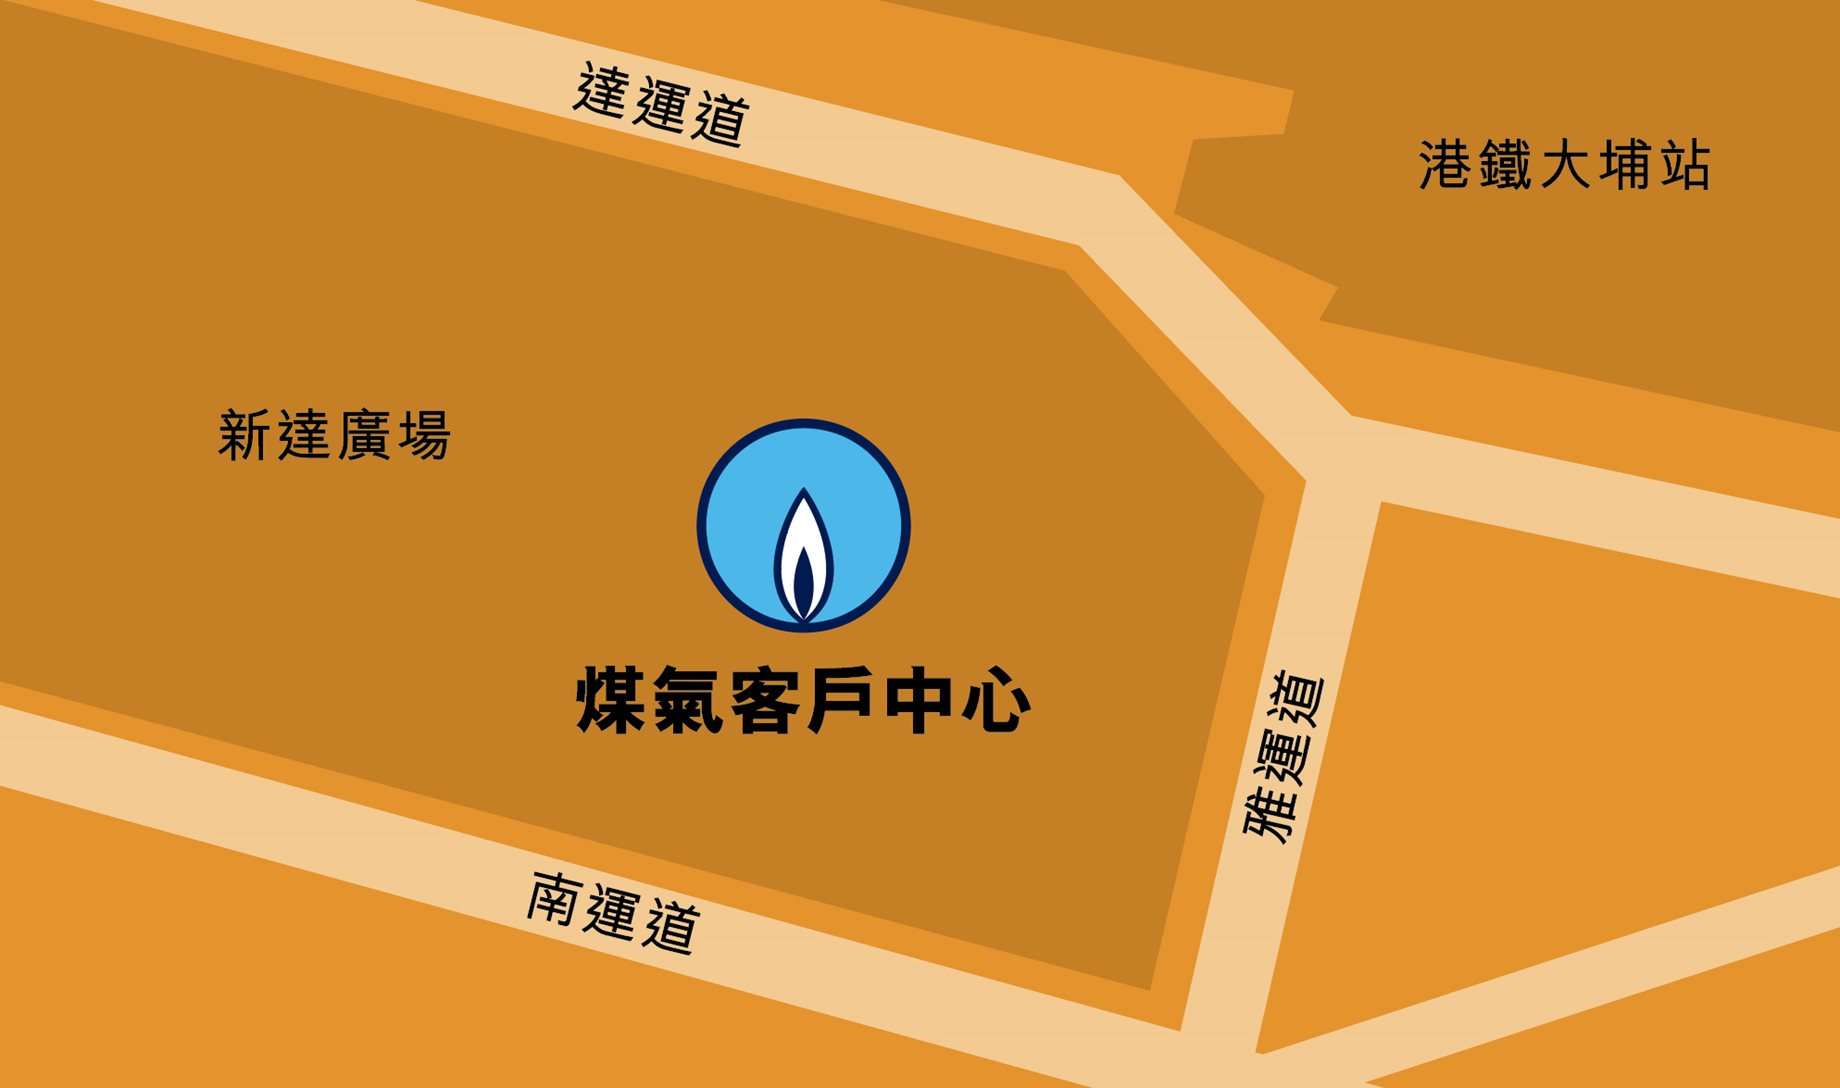 map1.jpg